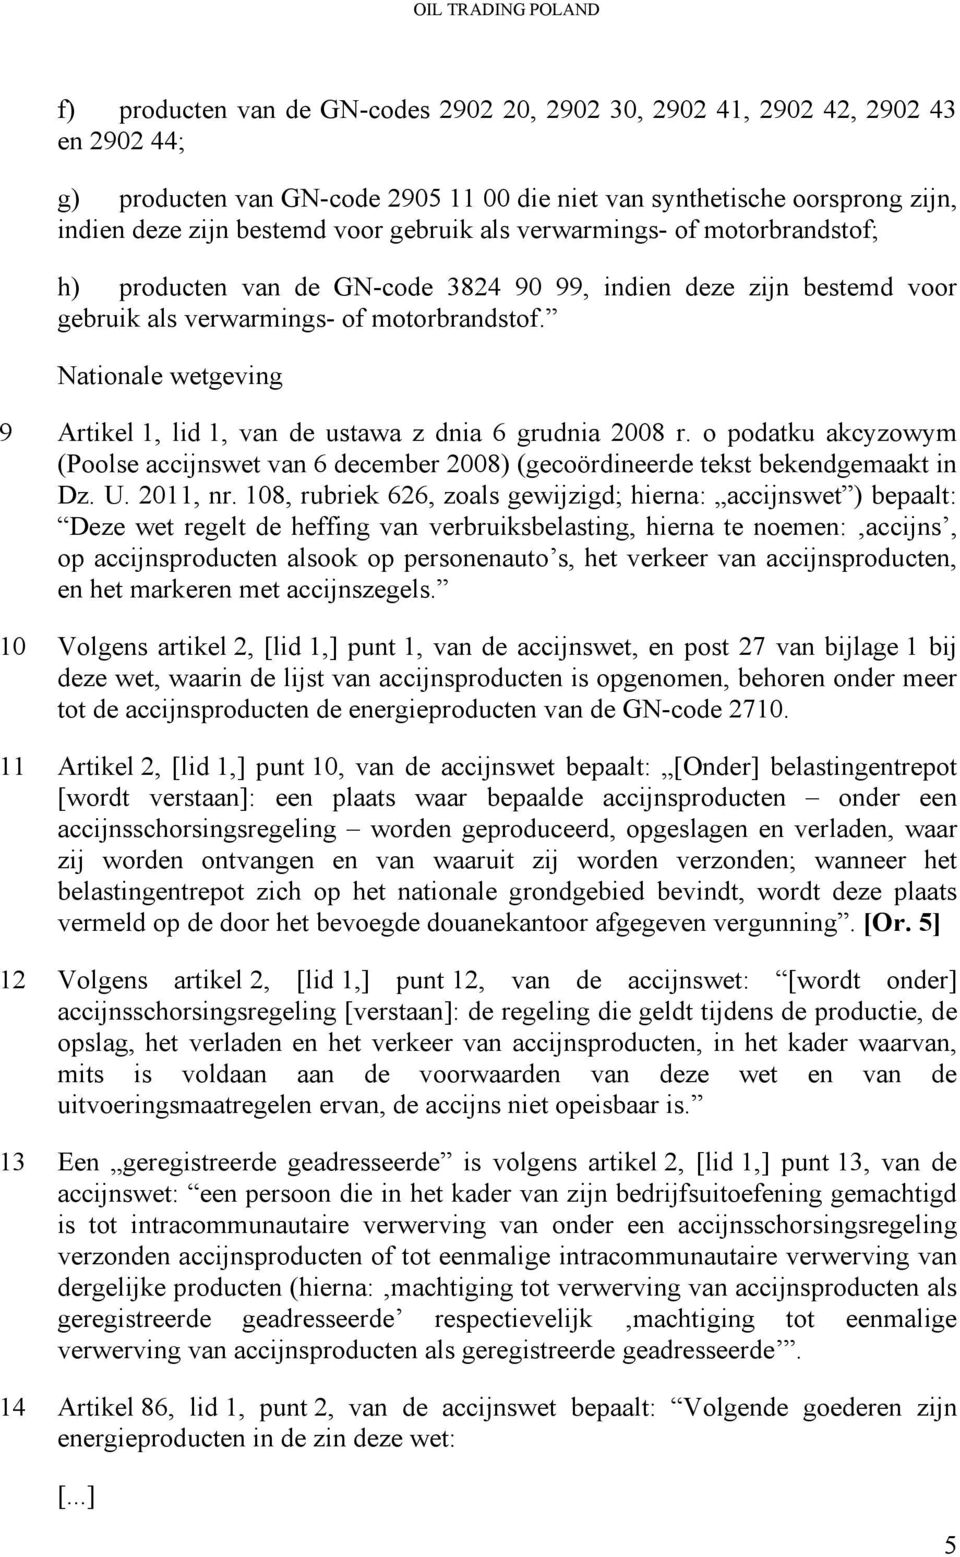 Nationale wetgeving 9 Artikel 1, lid 1, van de ustawa z dnia 6 grudnia 2008 r. o podatku akcyzowym (Poolse accijnswet van 6 december 2008) (gecoördineerde tekst bekendgemaakt in Dz. U. 2011, nr.